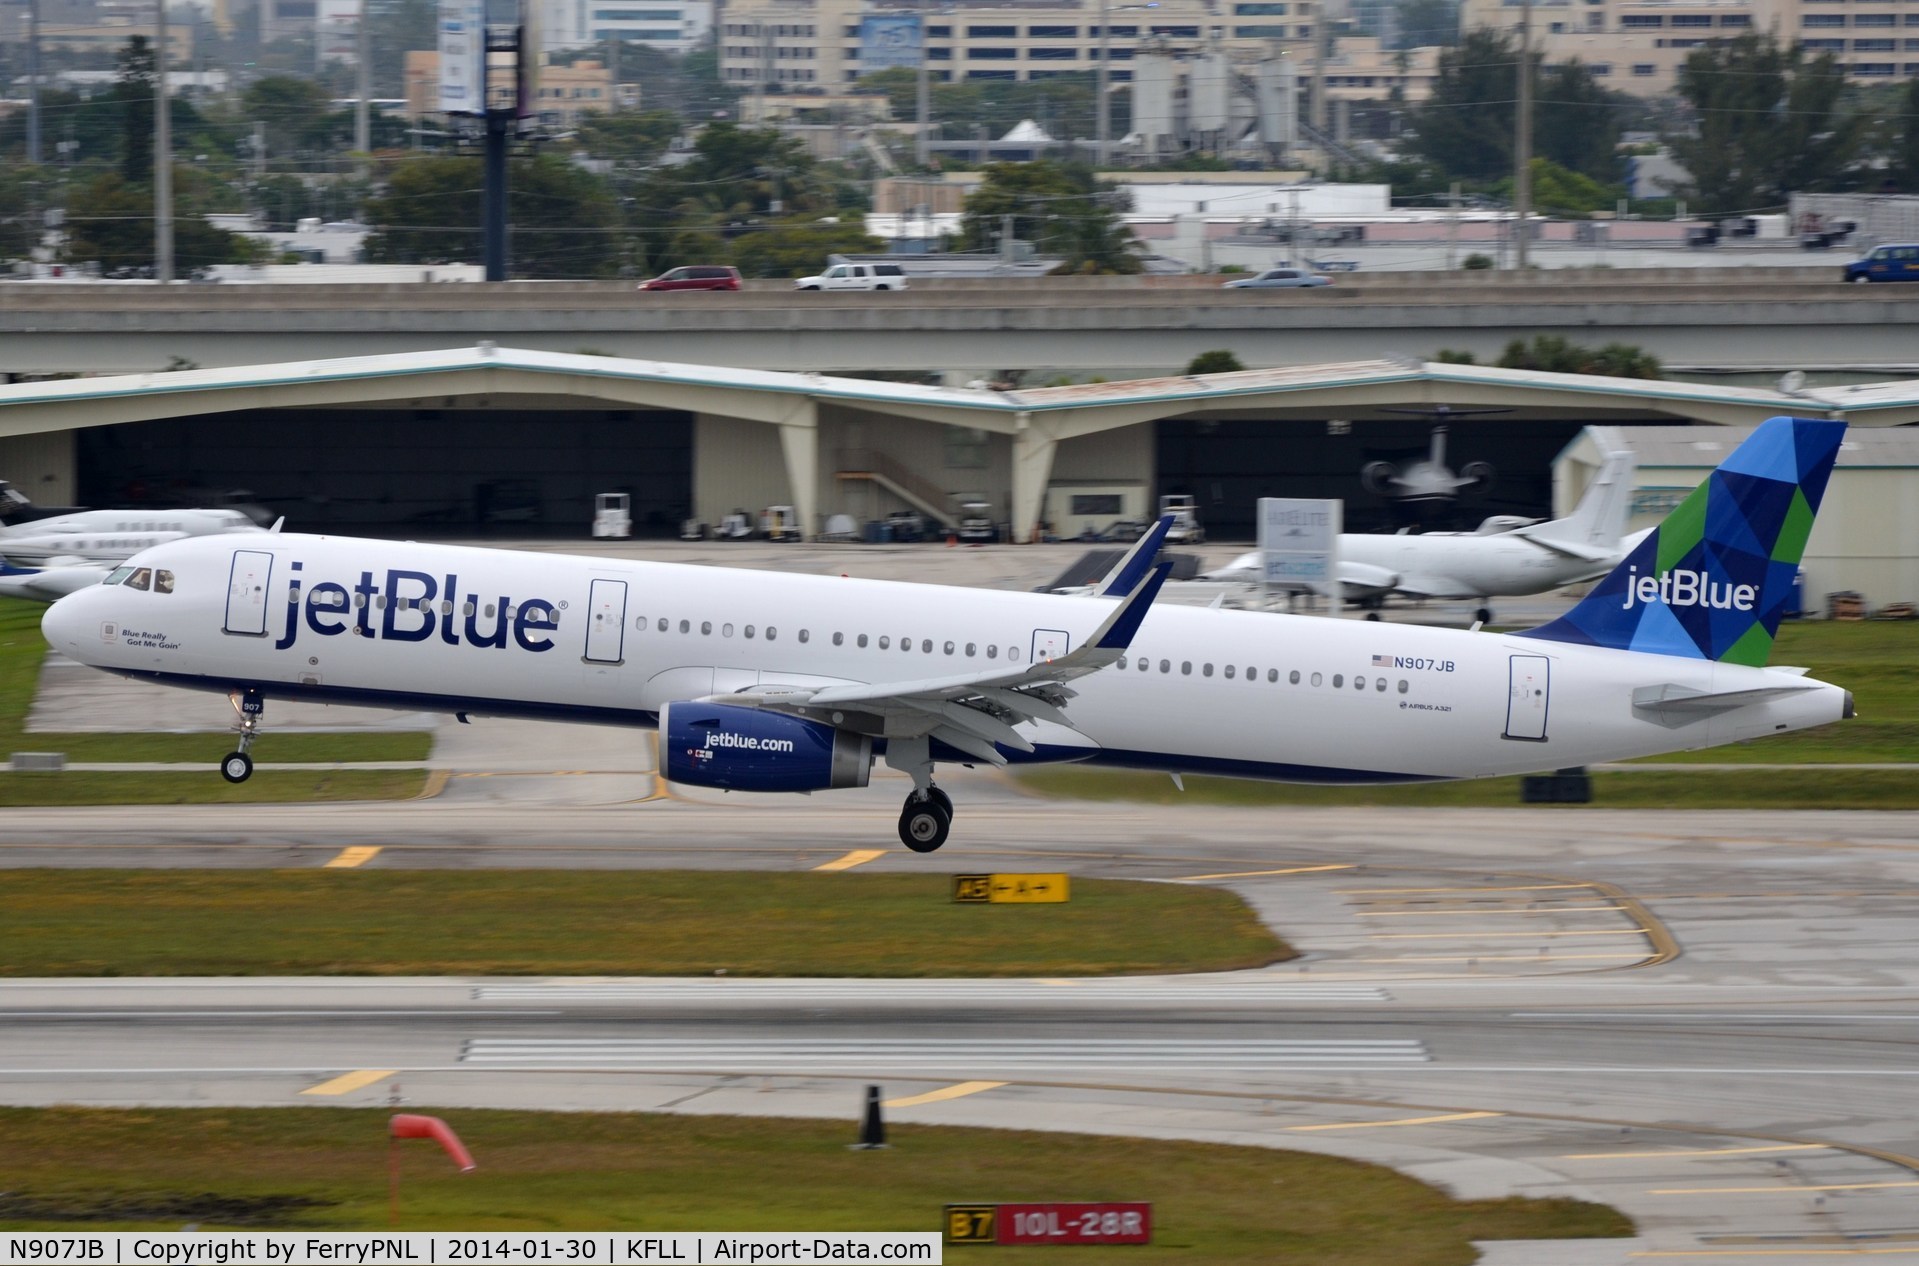 N907JB, 2013 Airbus A321-231 C/N 5865, JetBlue A321 arriving in FLL